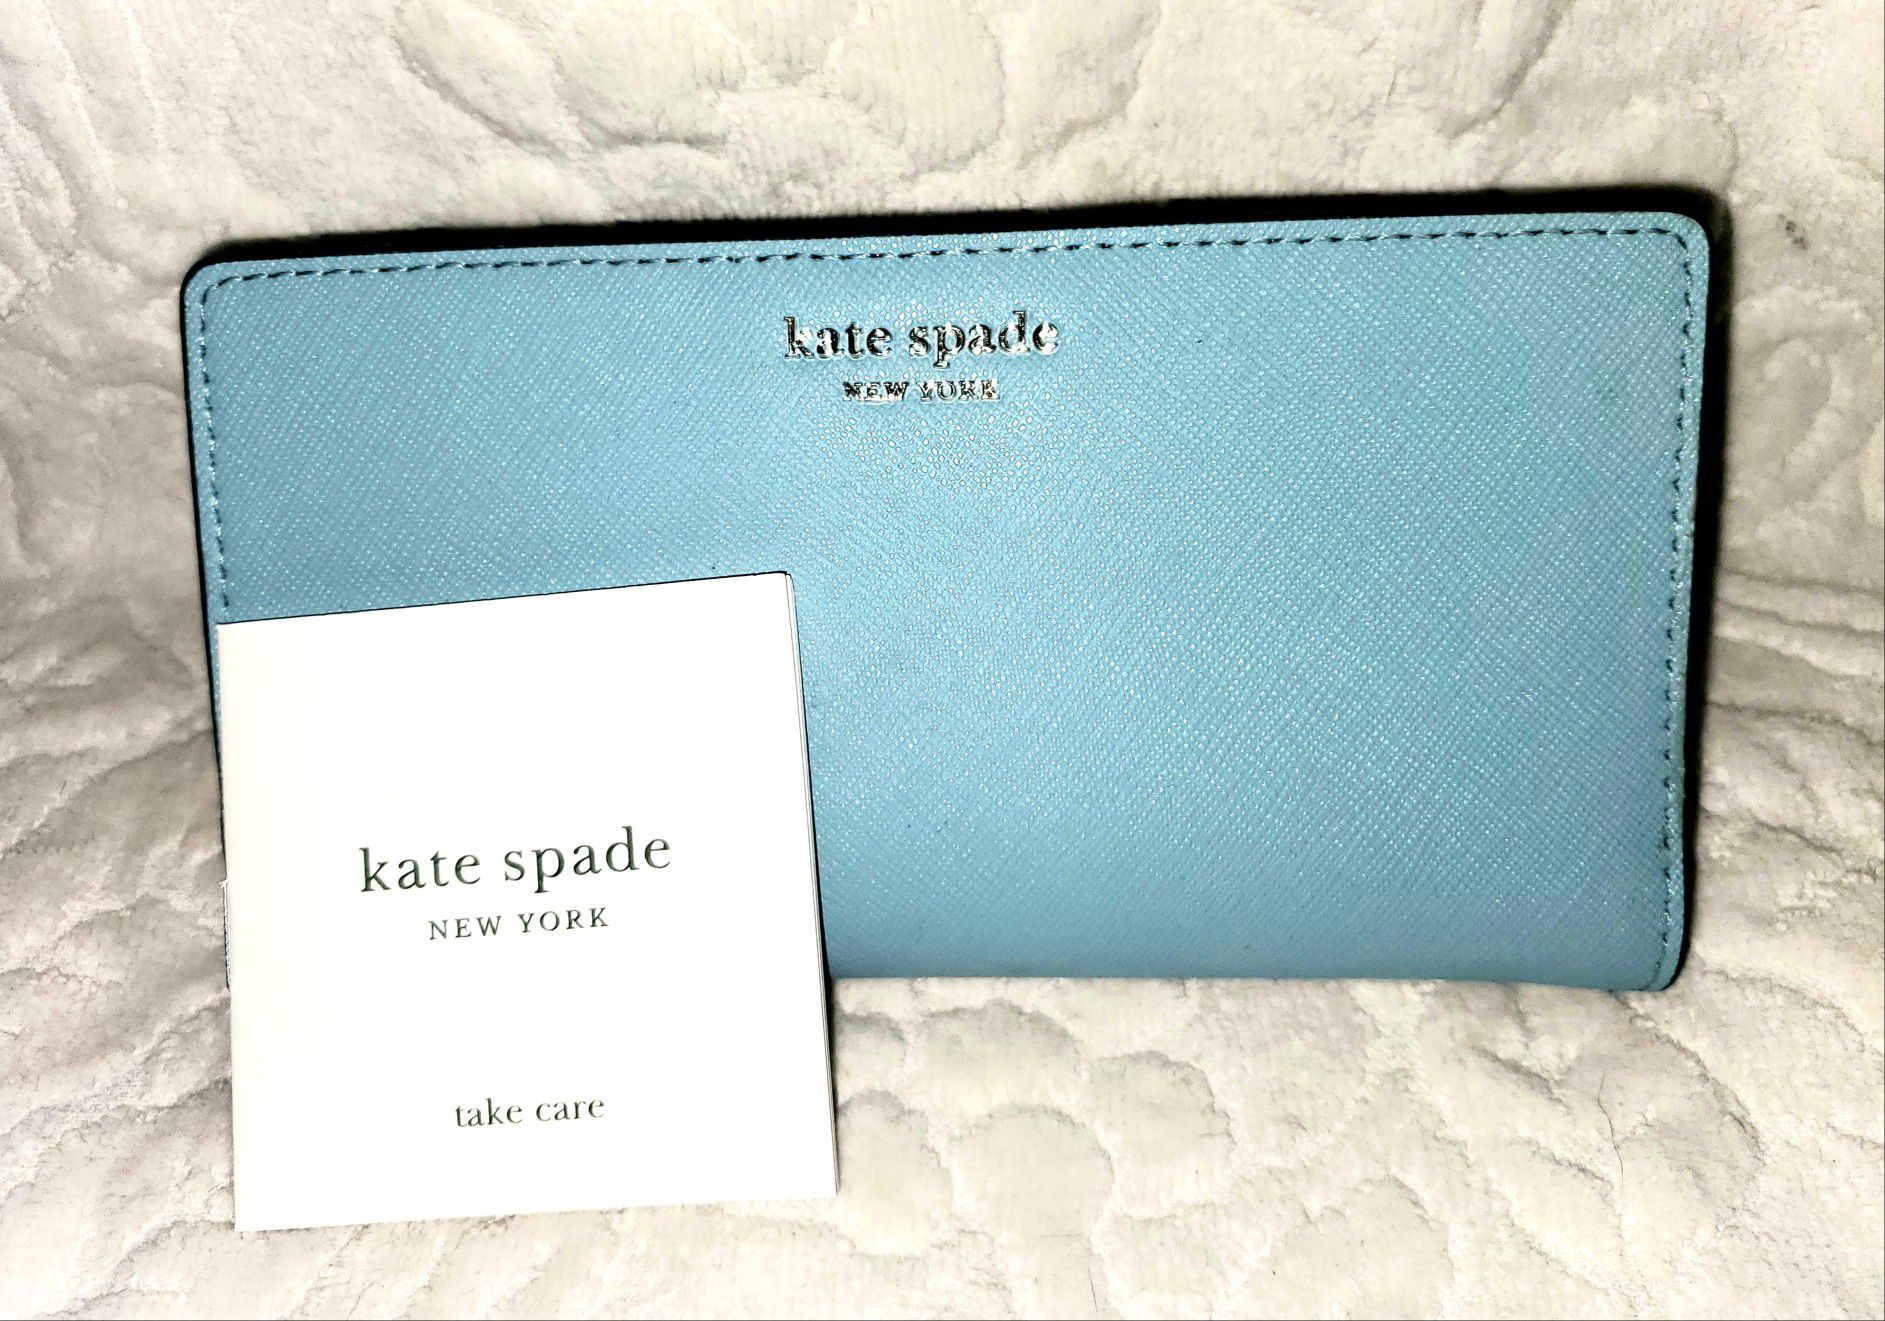 Brand new Kate Spade wallet